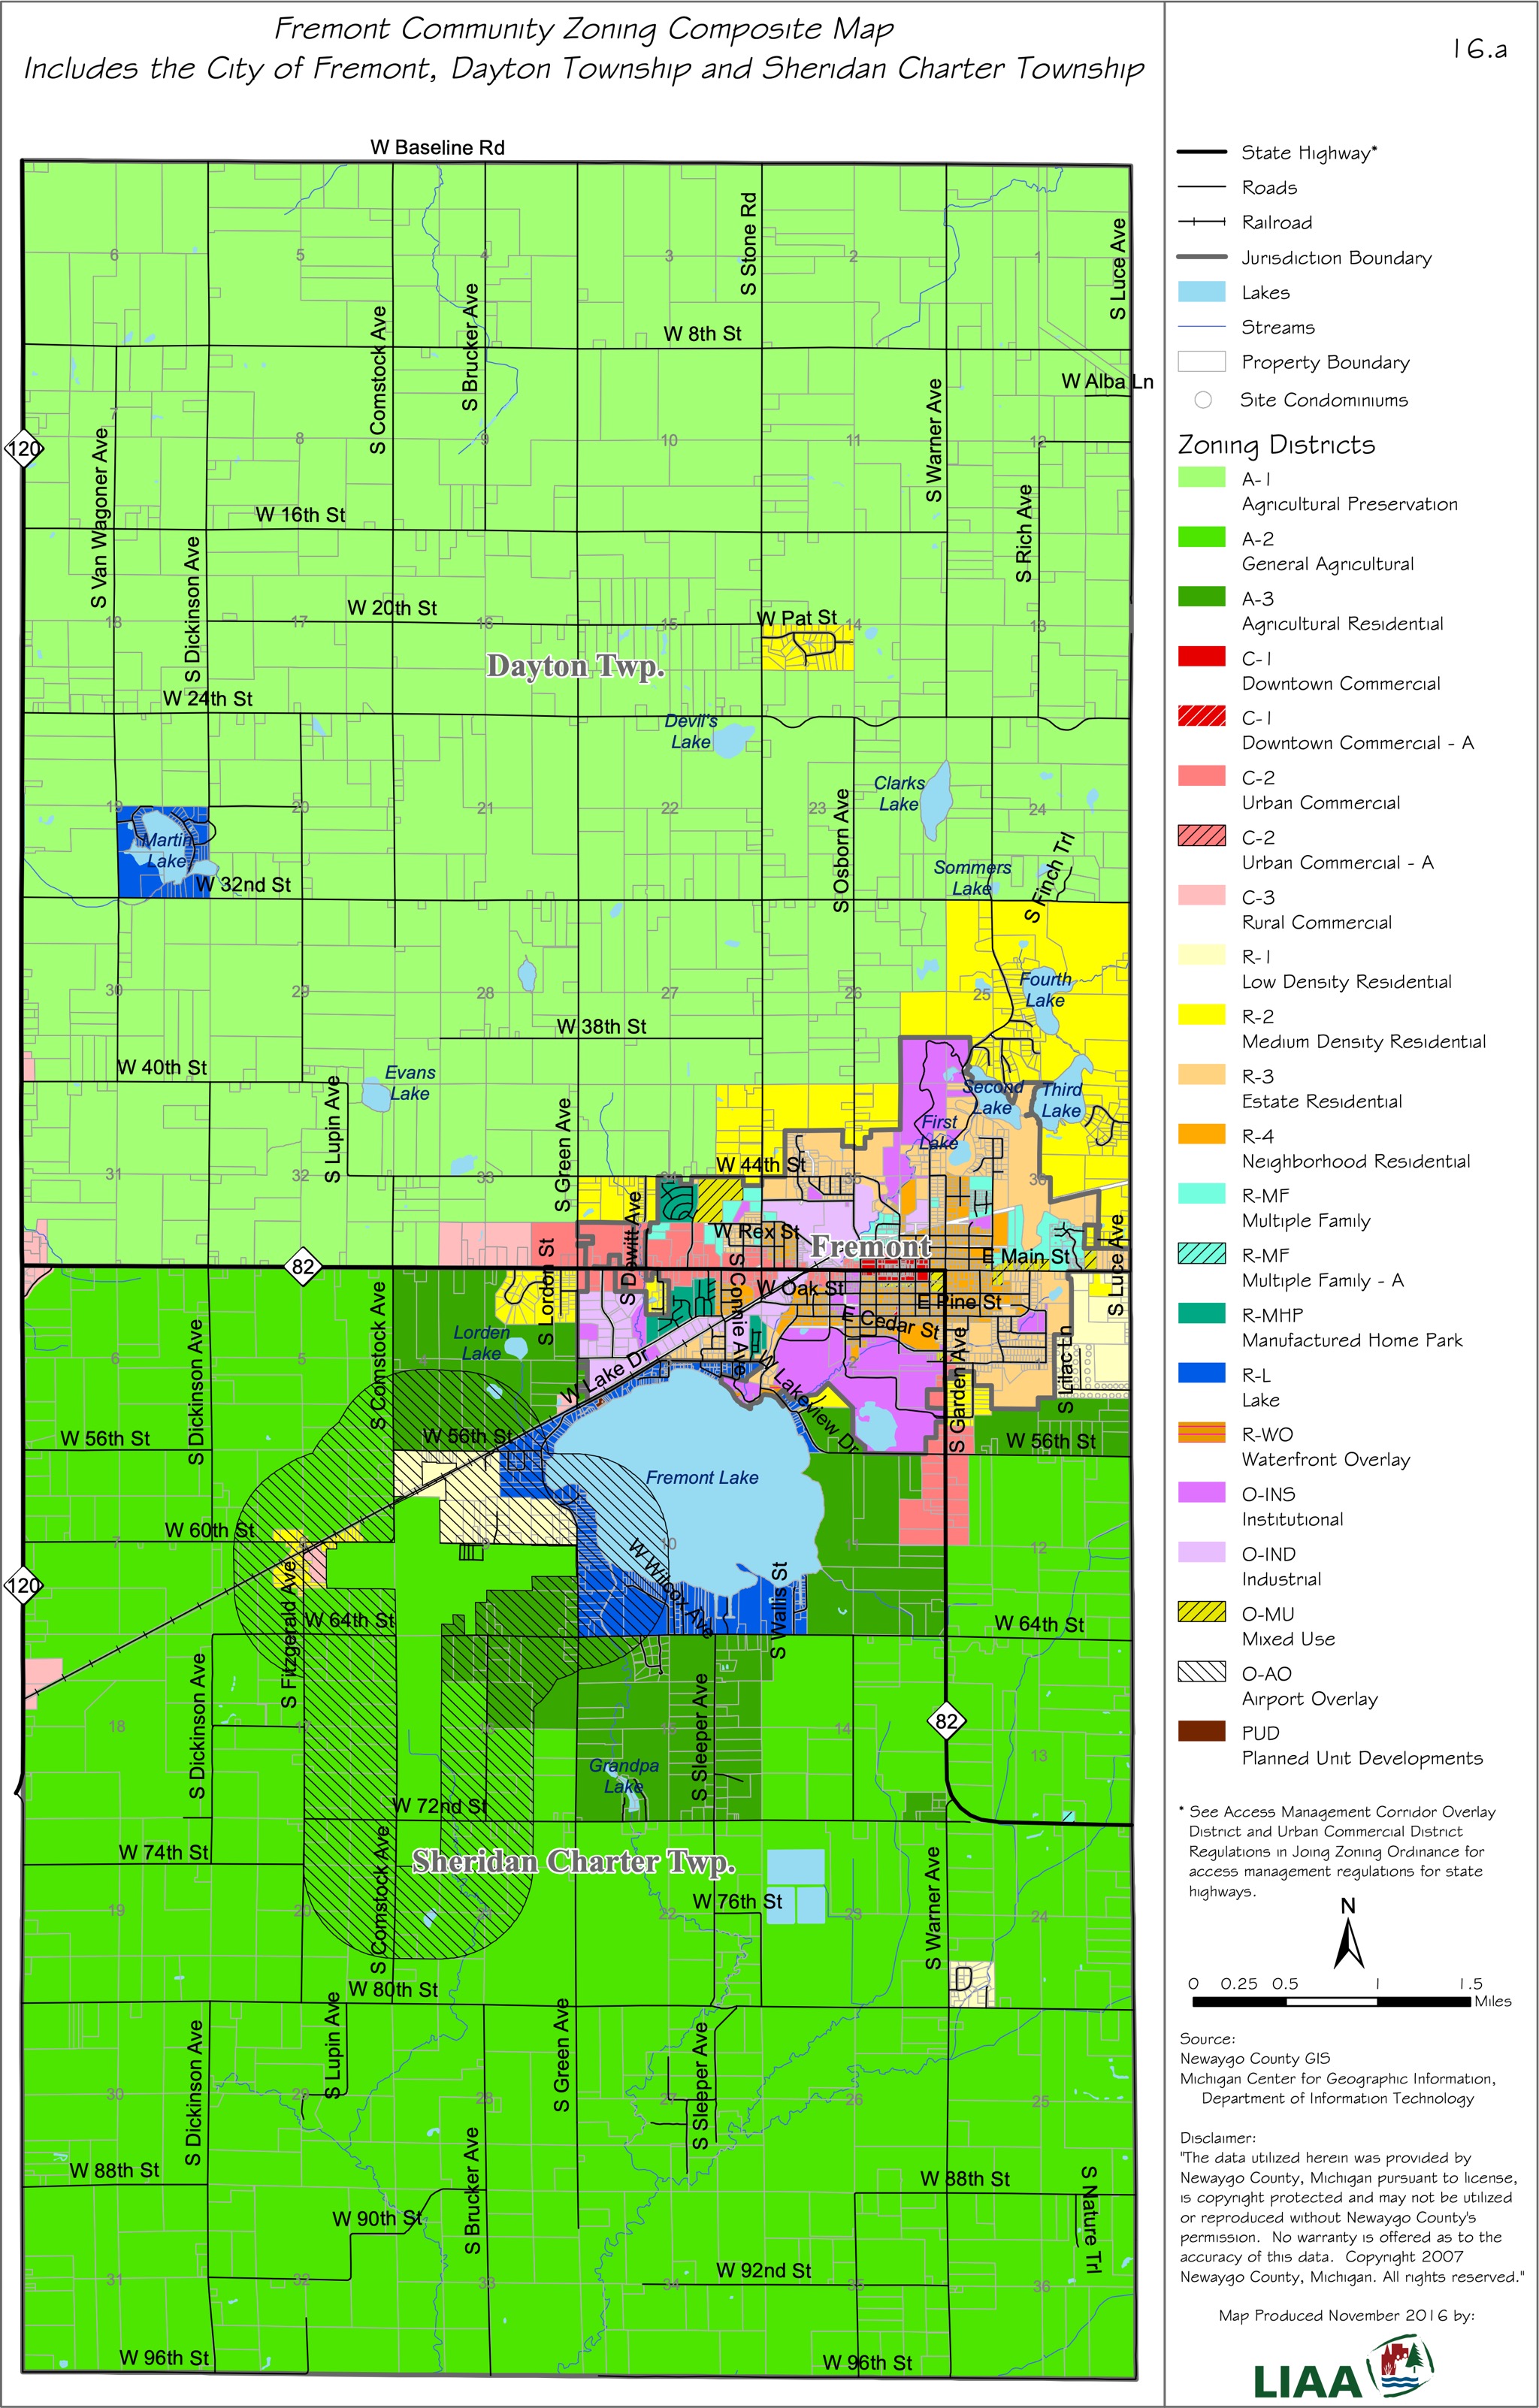 Fremont Community Composite Zoning Map PDF